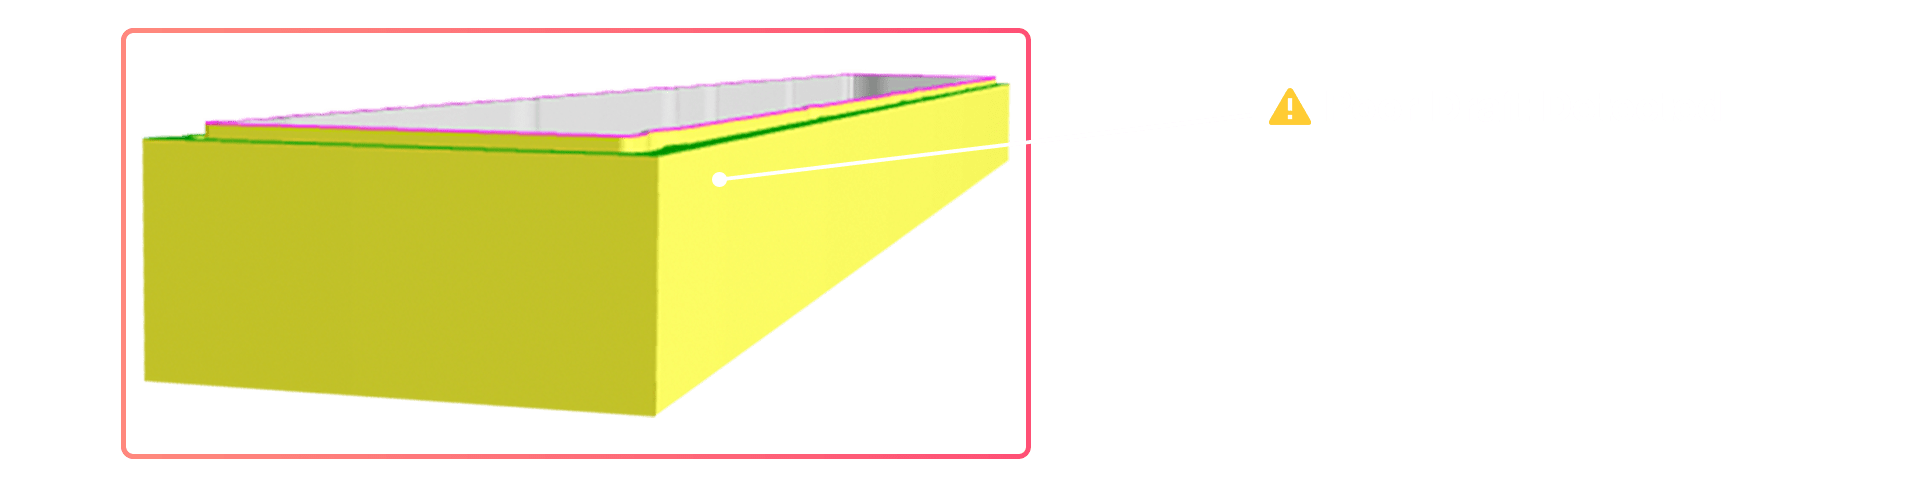 Plyable Draft Angle Example.png